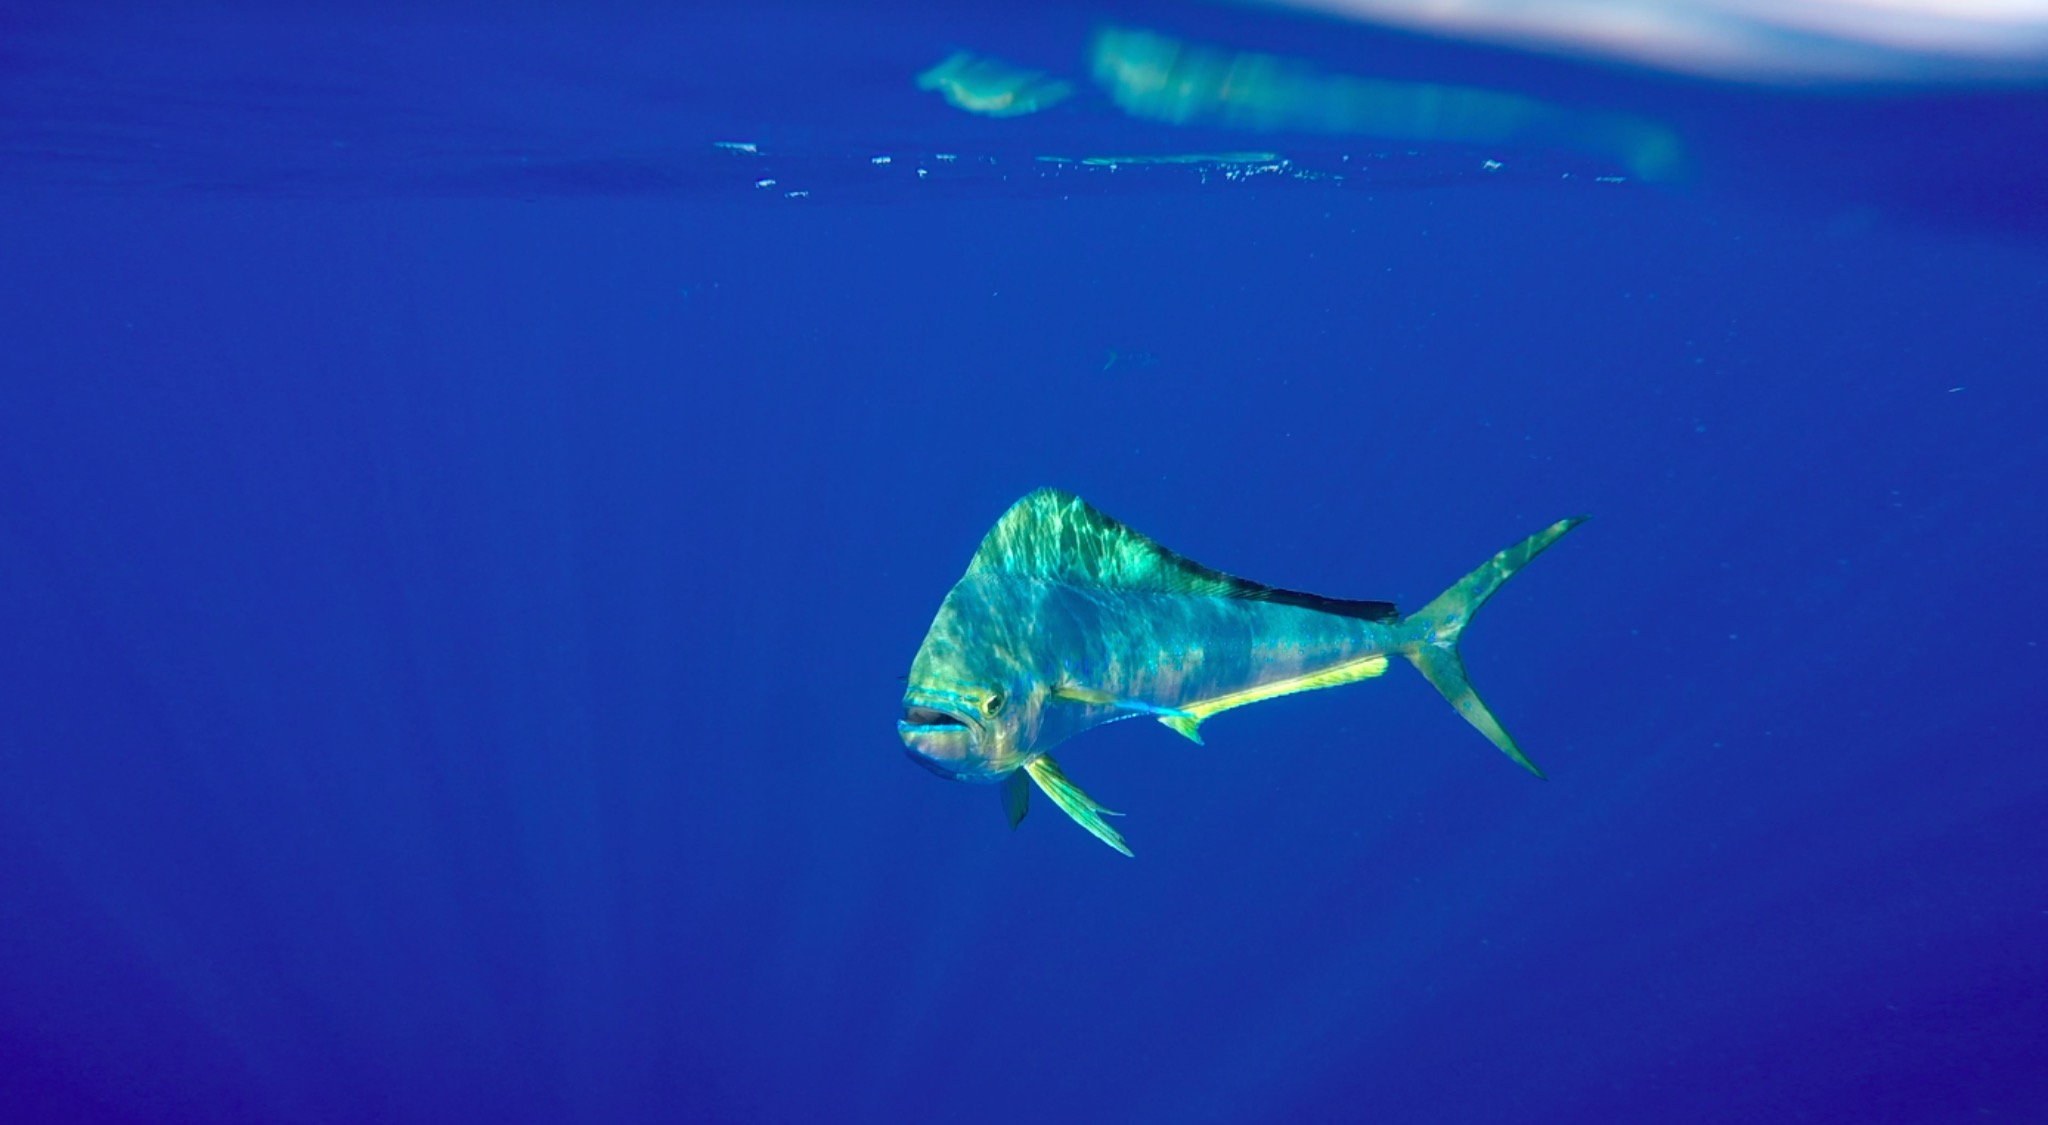 Mahi Mahi (dolphinfish) as captured by Hannah Van Alstine during Plastics Research